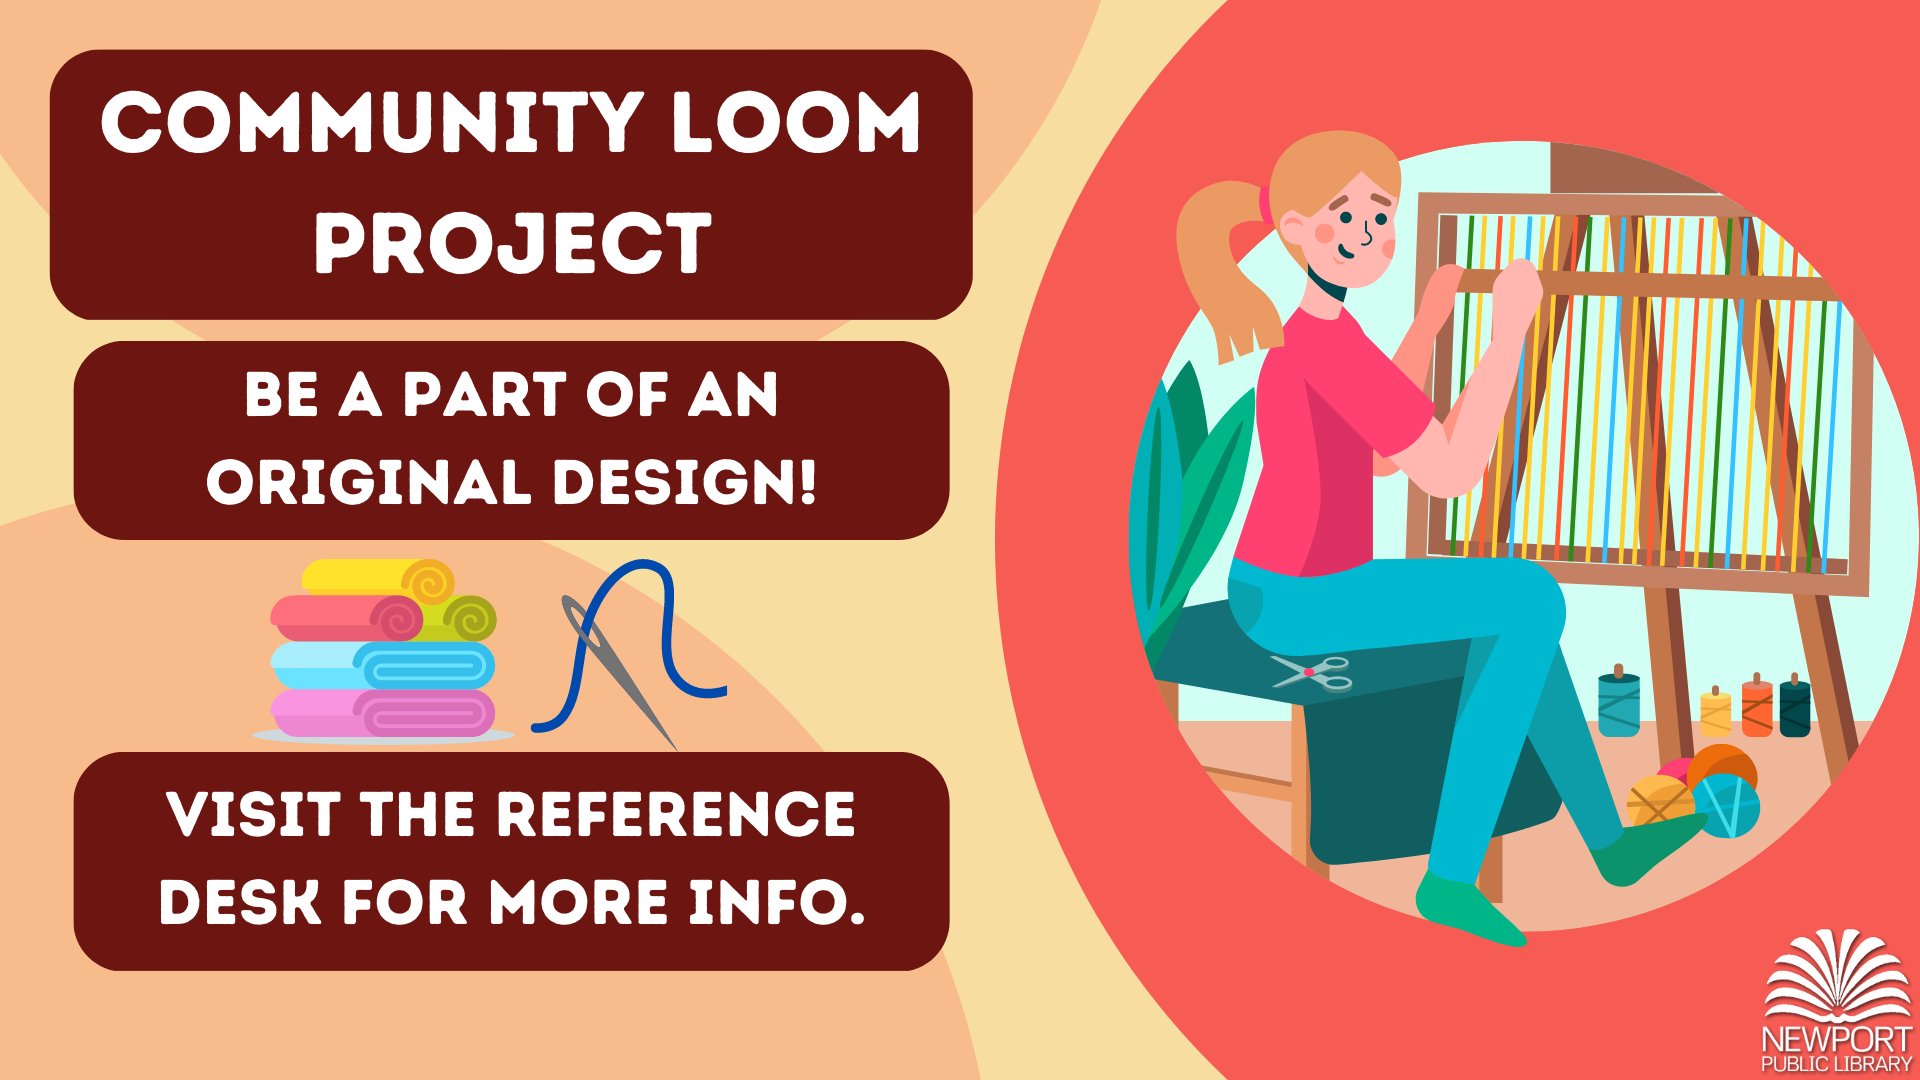 Community Loom Project